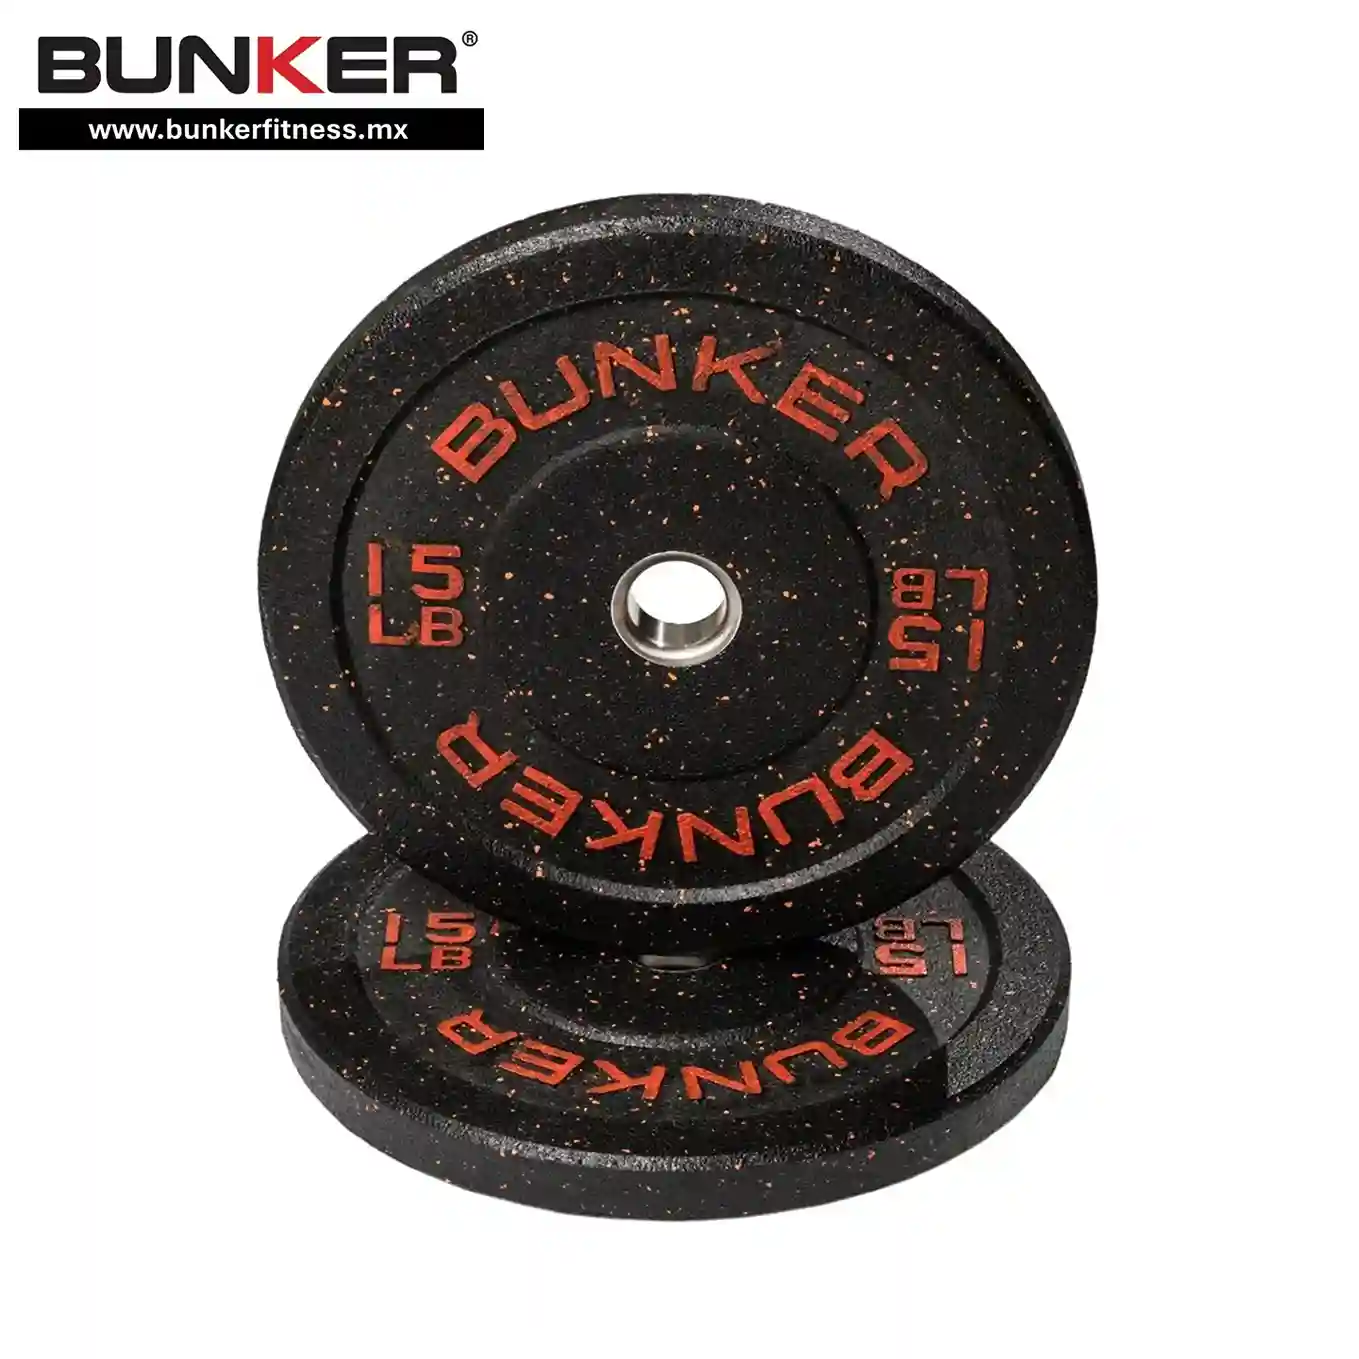 disco bumper bunker bunker fitness para ejercicio y gimnasio en casa gym ironside fitness import fitness 15 lb  tienda fitness bunker gym